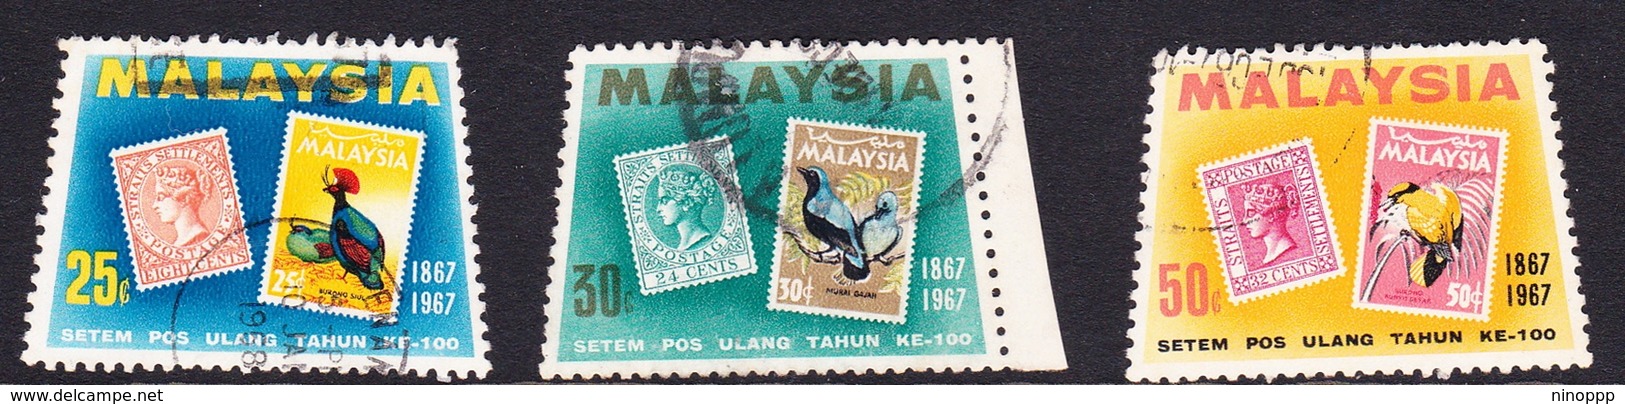 Malaysia SG 48-50 1967 Stamp Centenary, Used - Malaysia (1964-...)